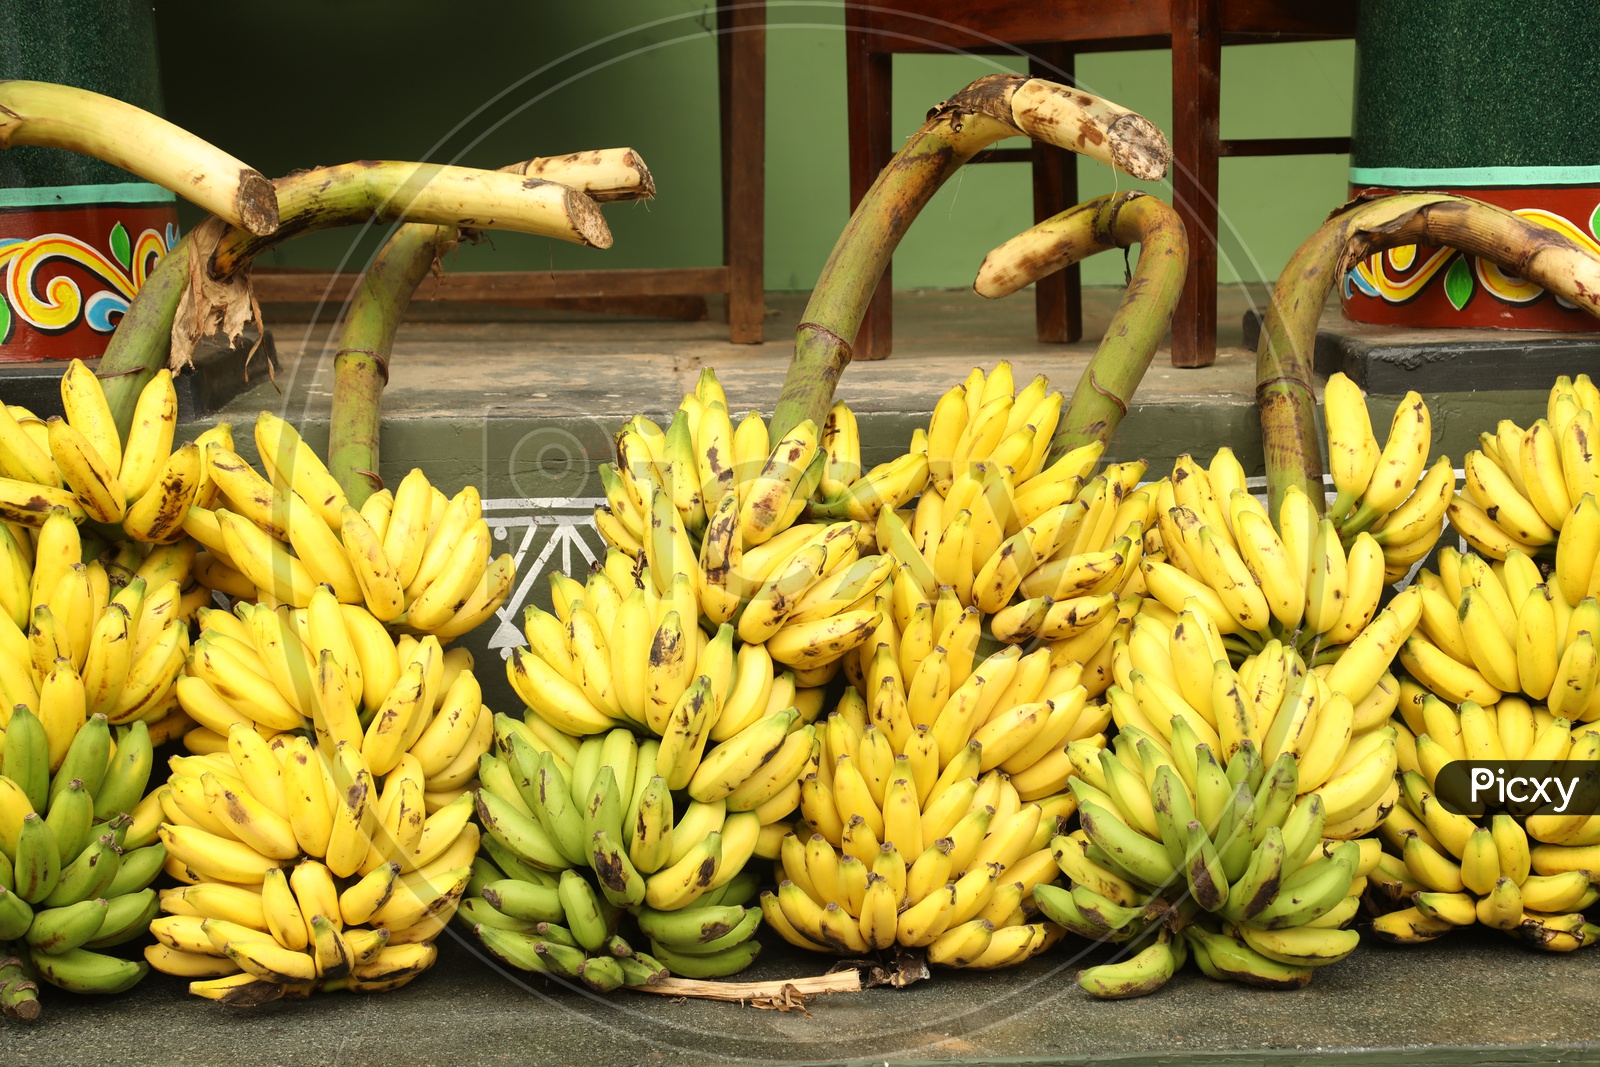 Bunches of bananas at Village house